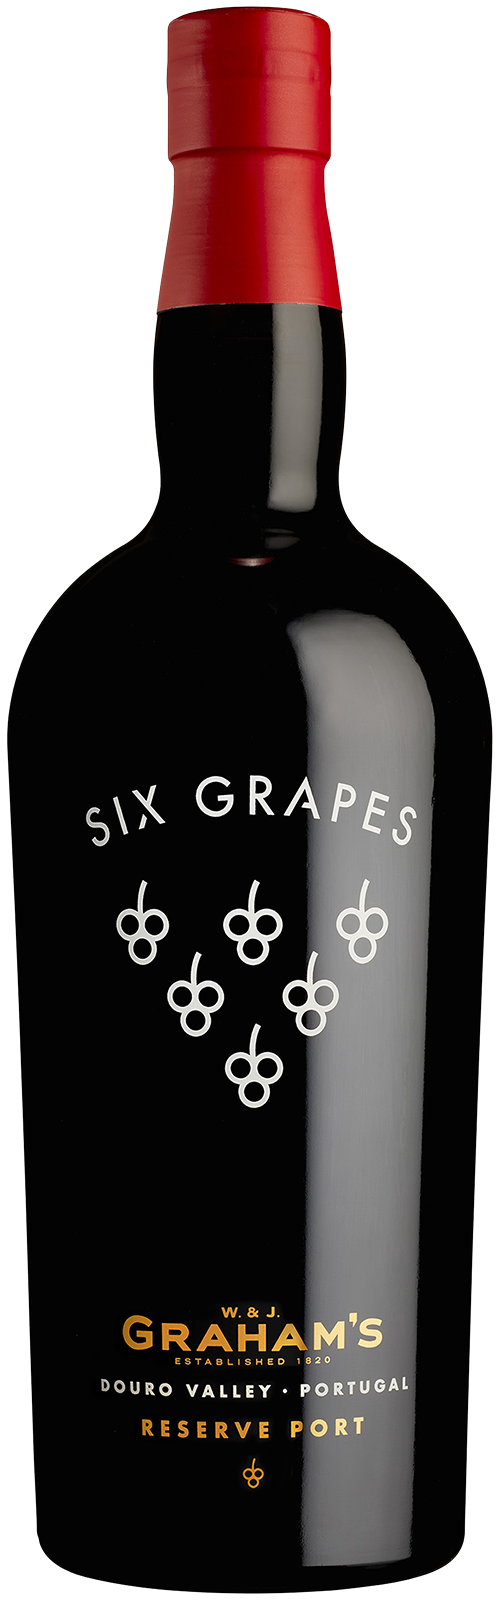 Graham's Port Six Grapes 20°